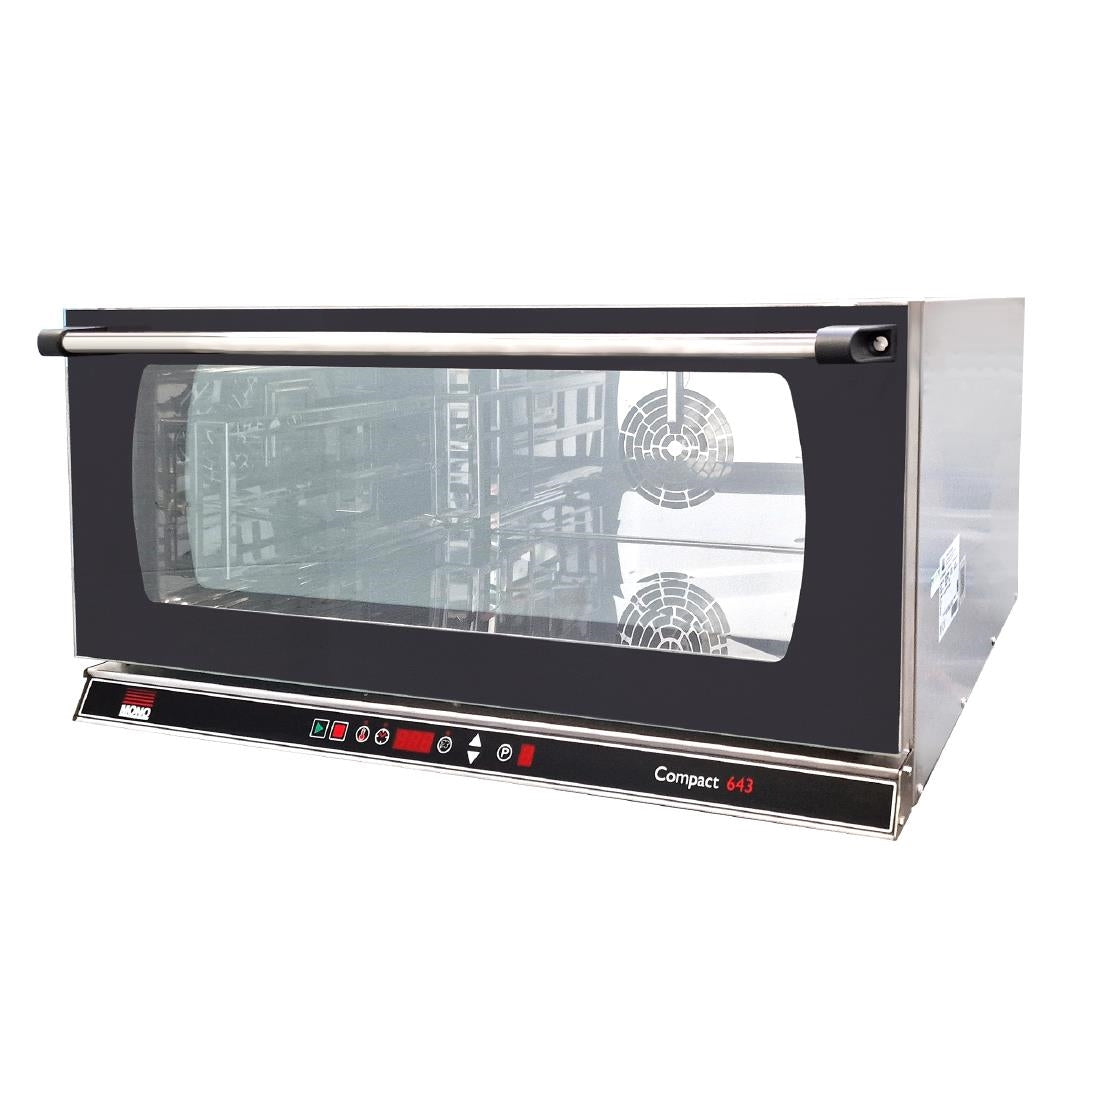 HT427 Mono 3 Tray Compact Oven 2.7kW Single Phase FG148C-A22